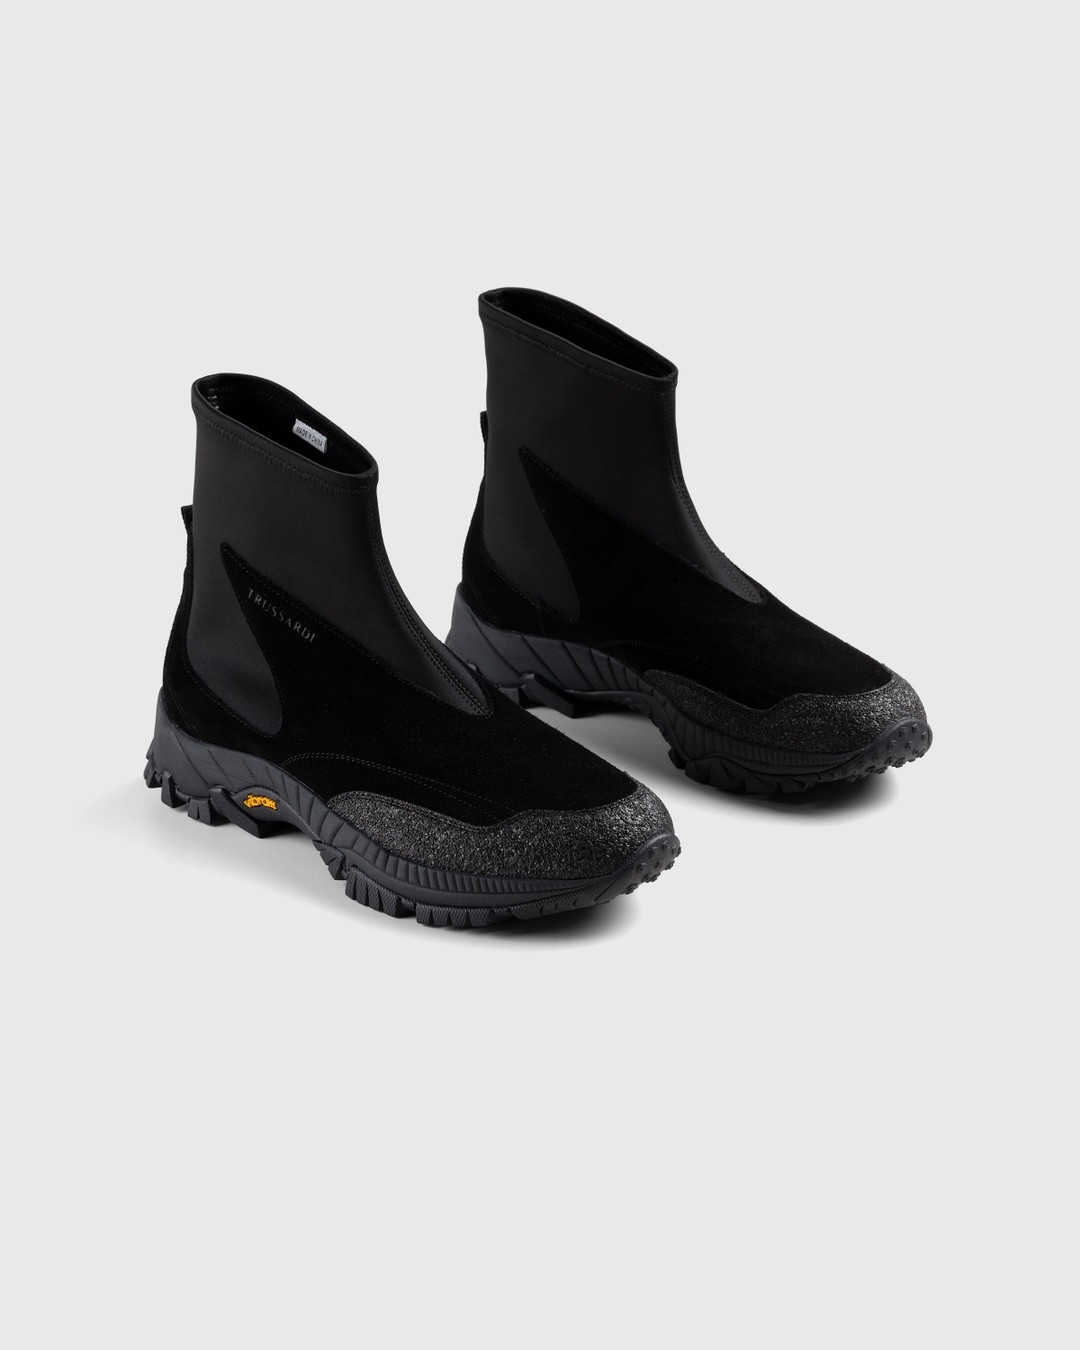 Trussardi – Neo Sock Sneaker Black - Low Top Sneakers - Black - Image 3